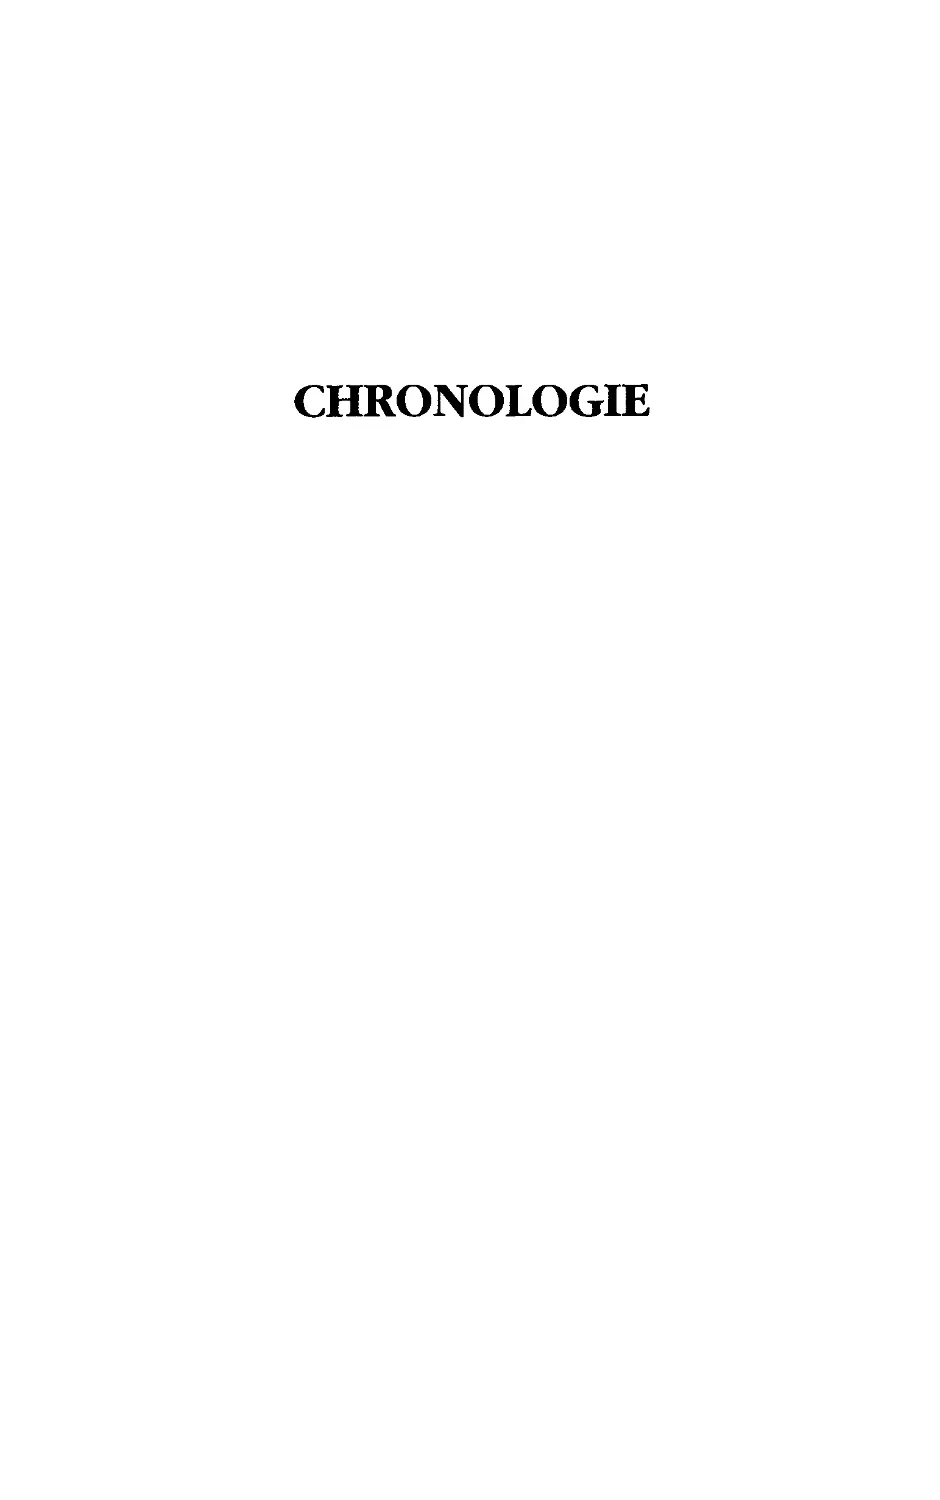 Chronologie [1121]